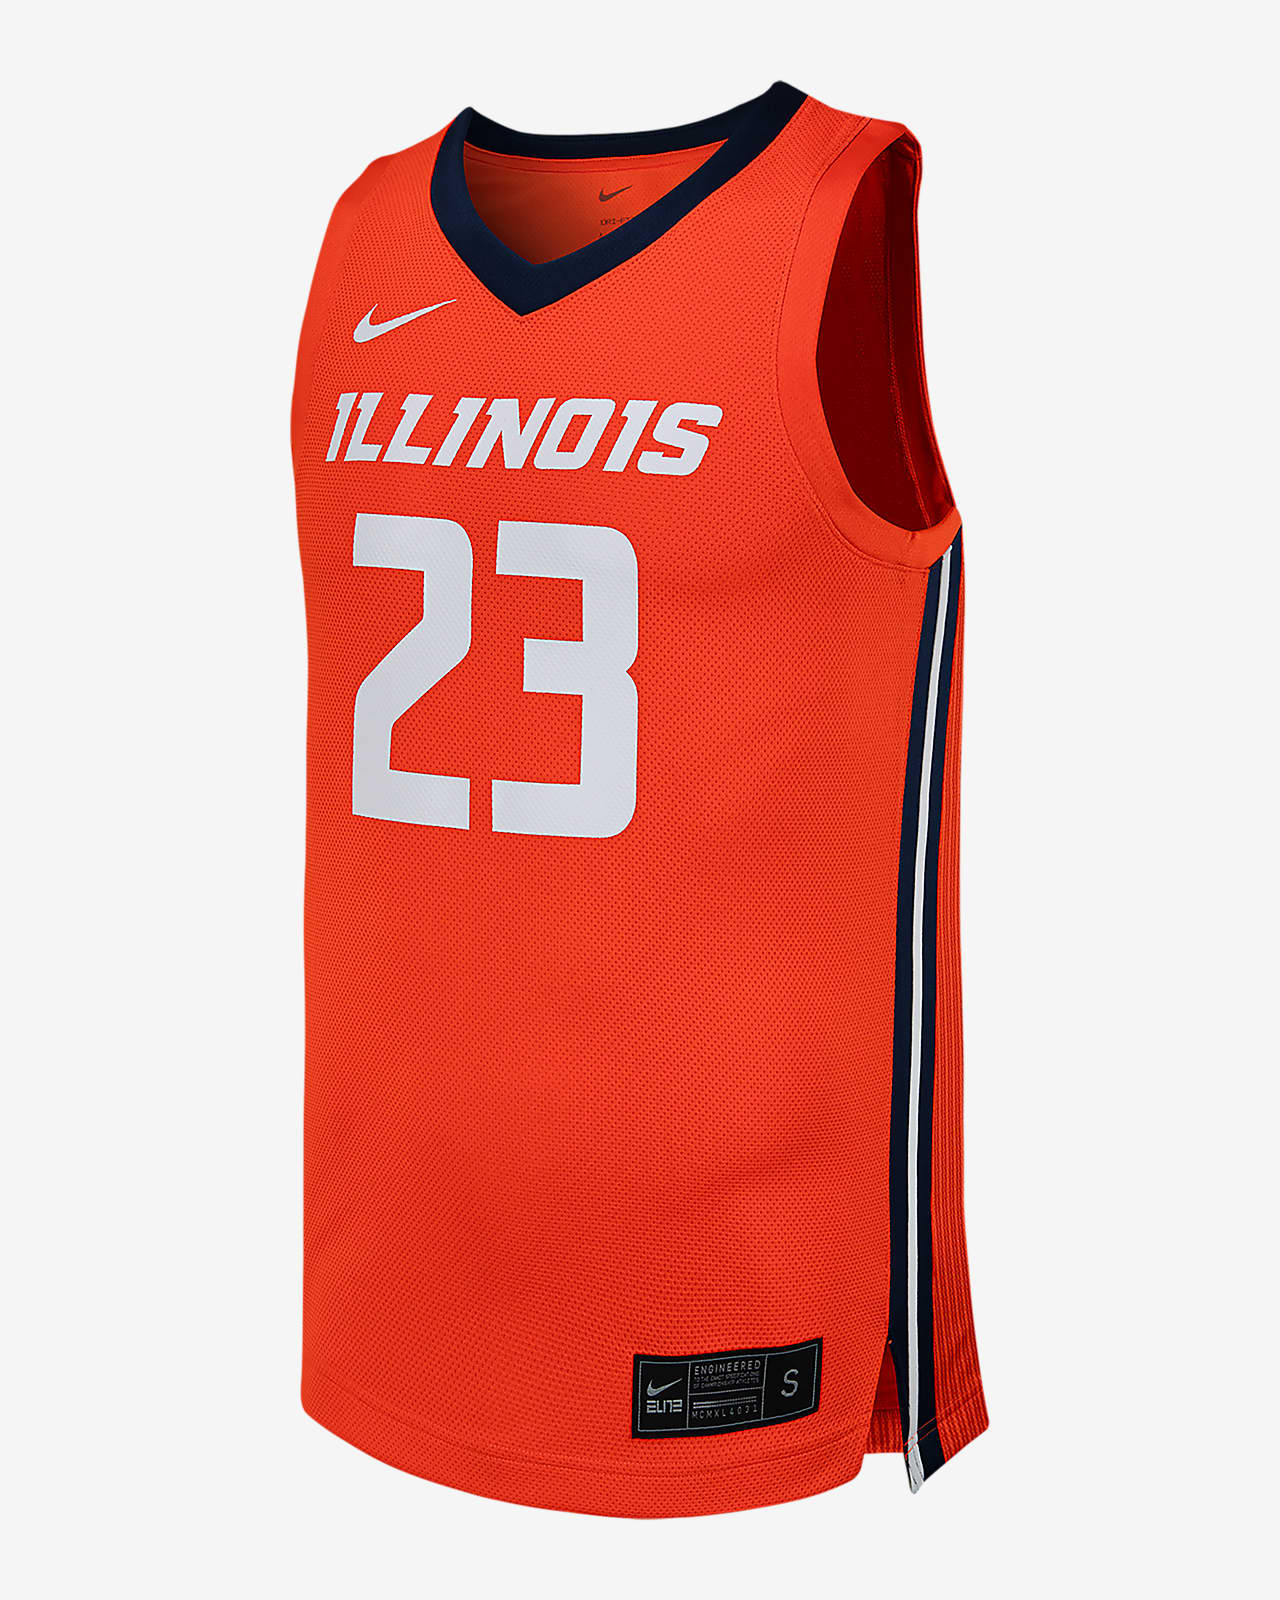 Illinois Men's Nike College Basketball Replica Jersey